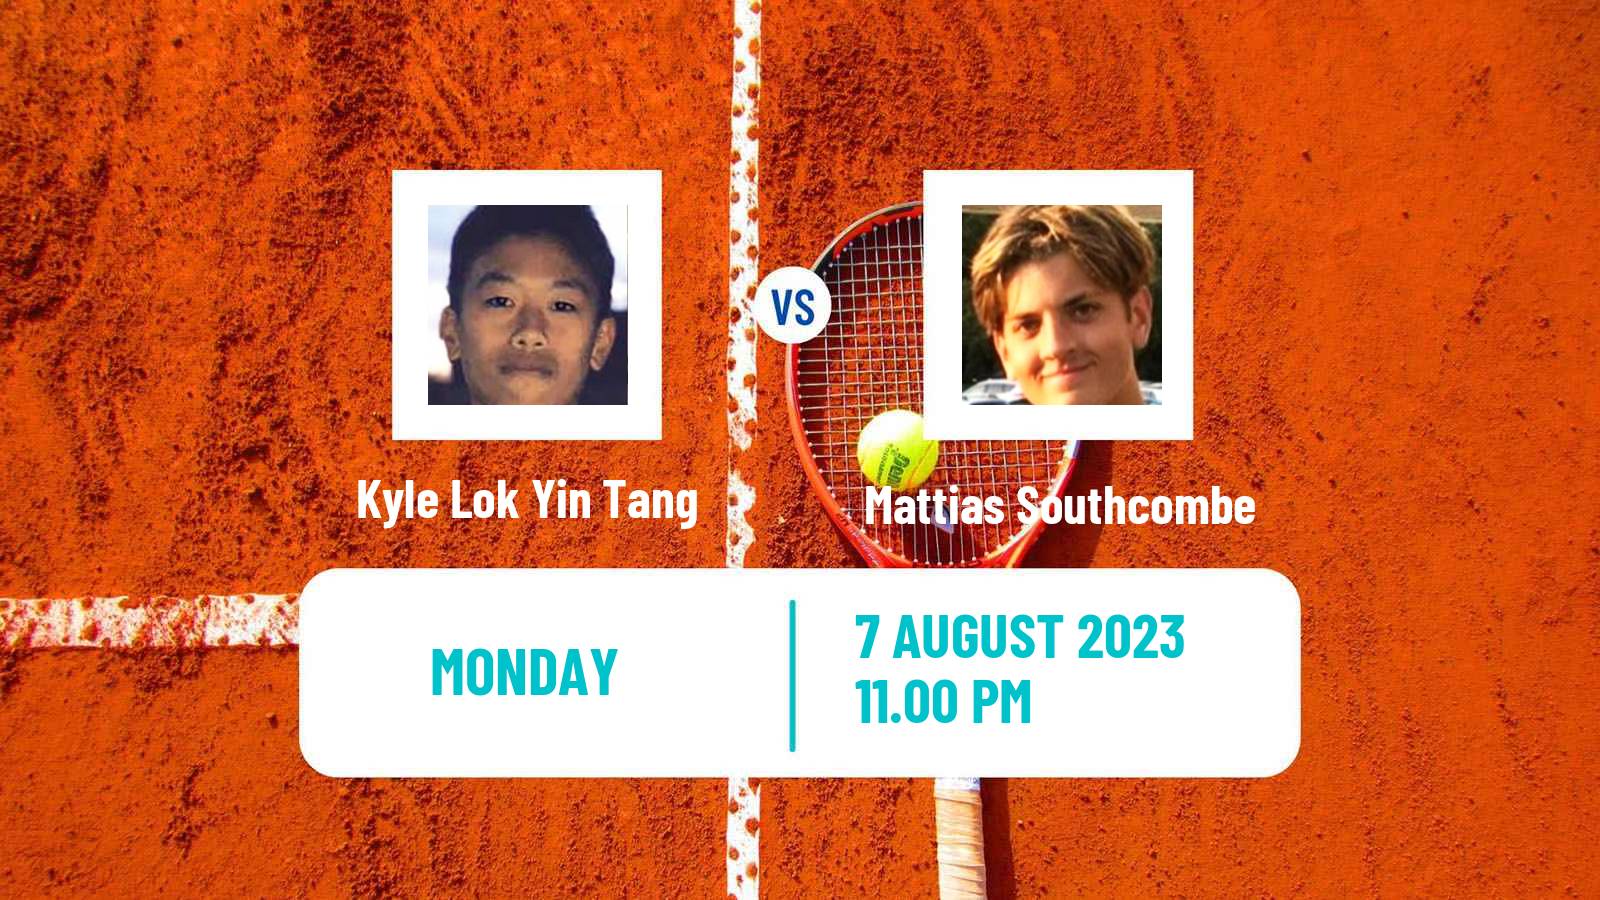 Tennis ITF M25 Baotou Men Kyle Lok Yin Tang - Mattias Southcombe